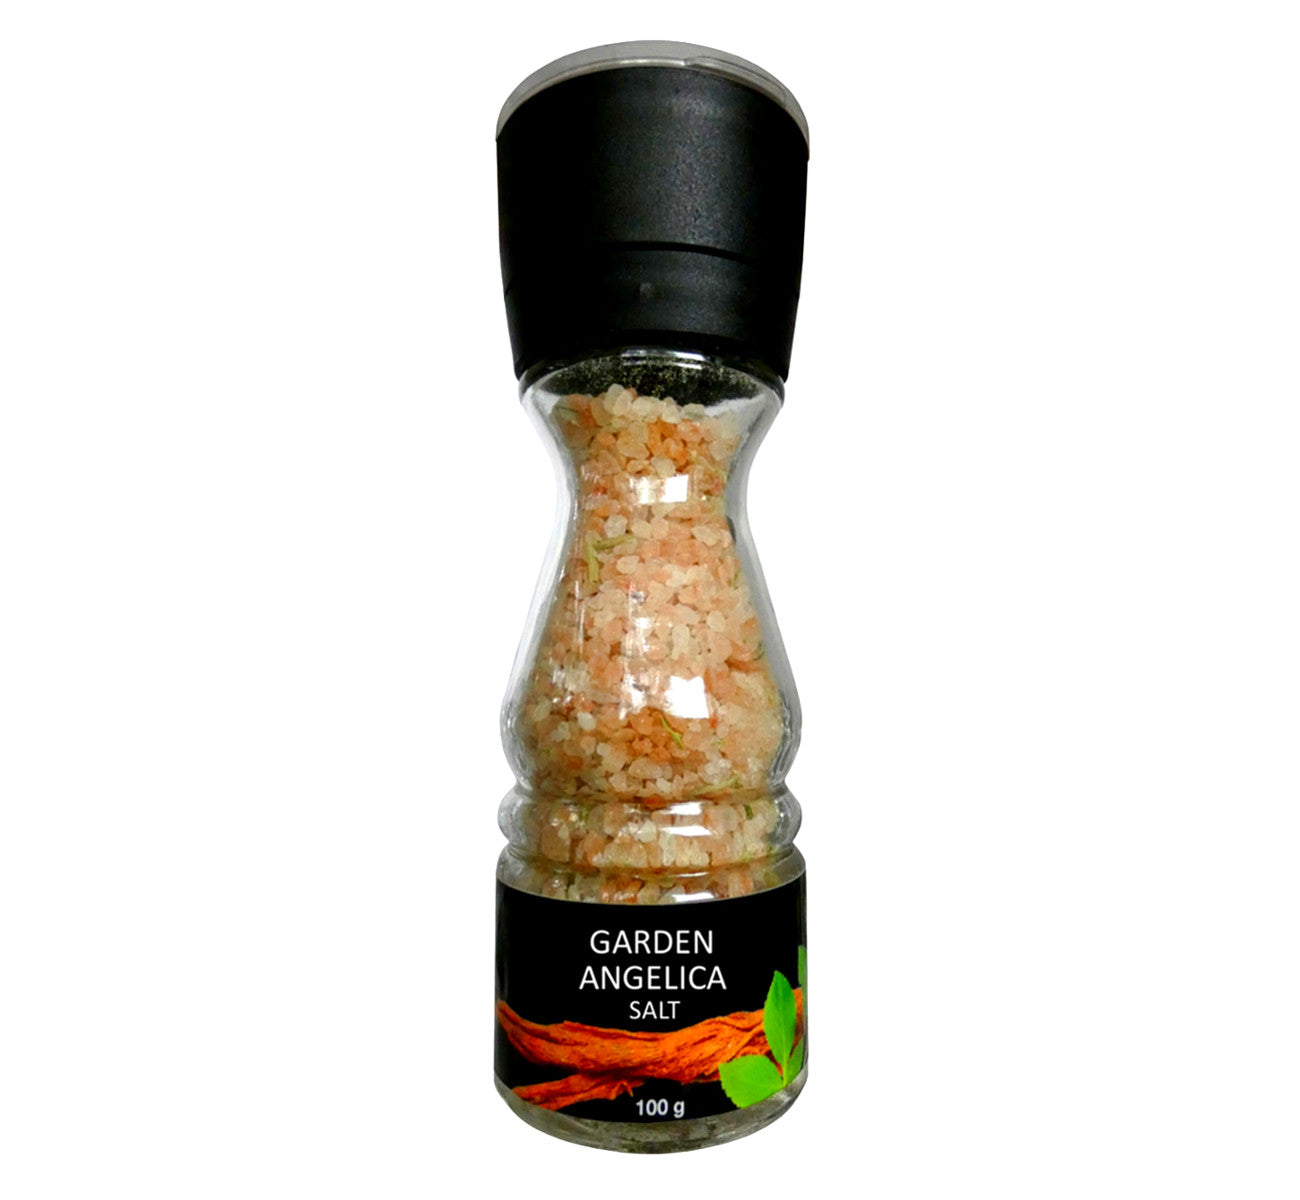 Seasoned salt grinder with handmade organic garden angelica salt 100 g, from unpolluted nature of Lapland, Finland.